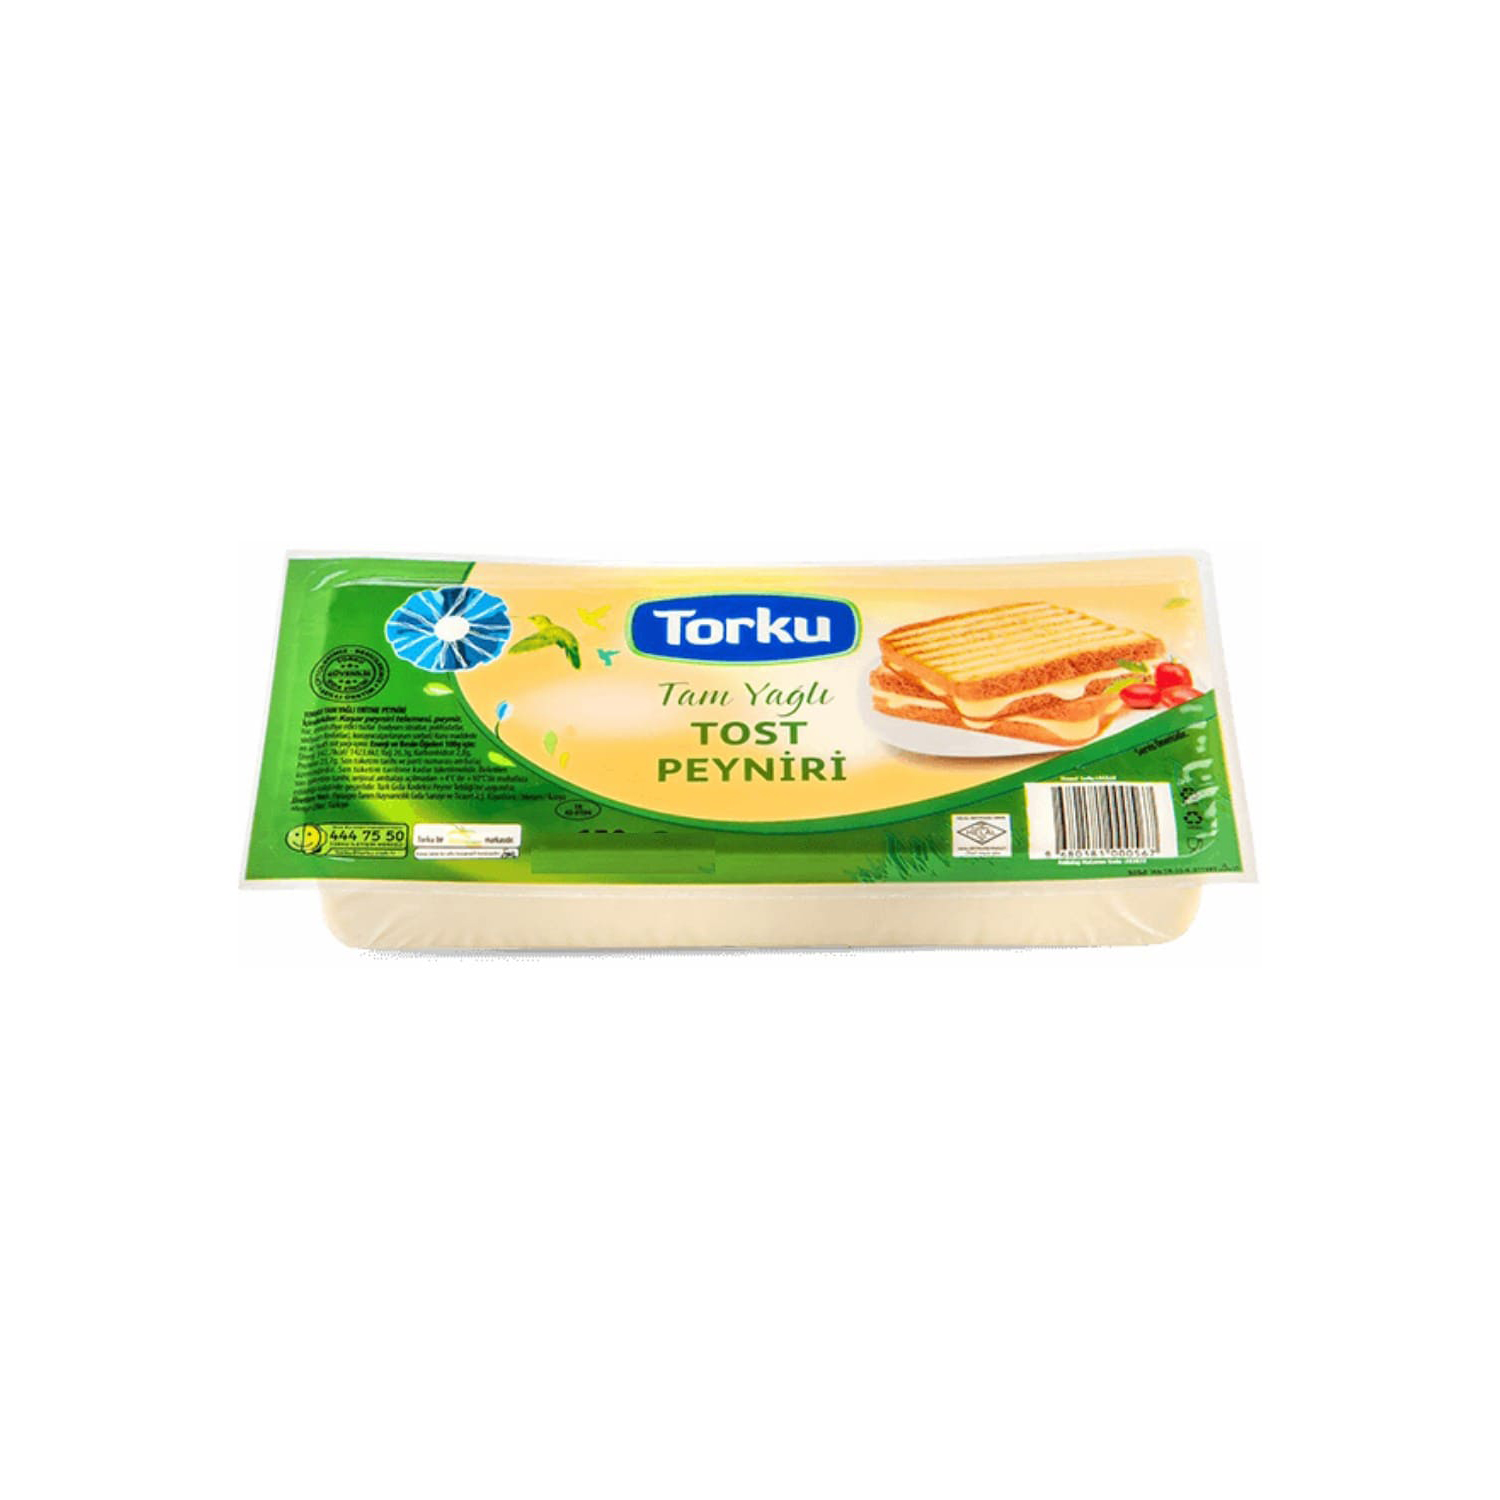 Torku Tam Yağlı Tost Peyniri 600 Gr 1 Koli (12 Adet)